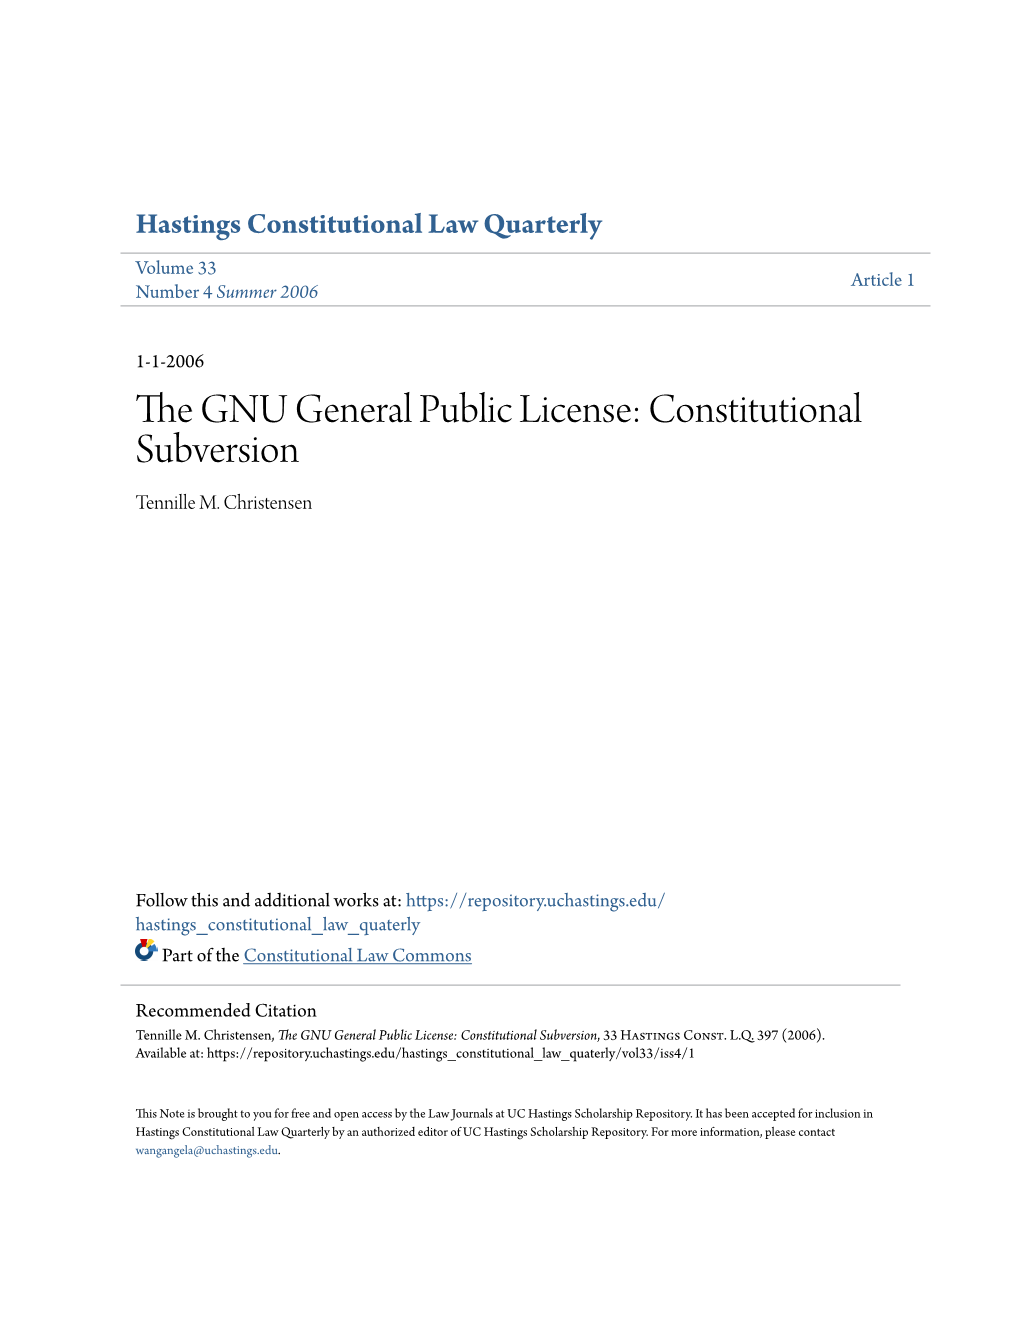 The GNU General Public License: Constitutional Subversion Tennille M